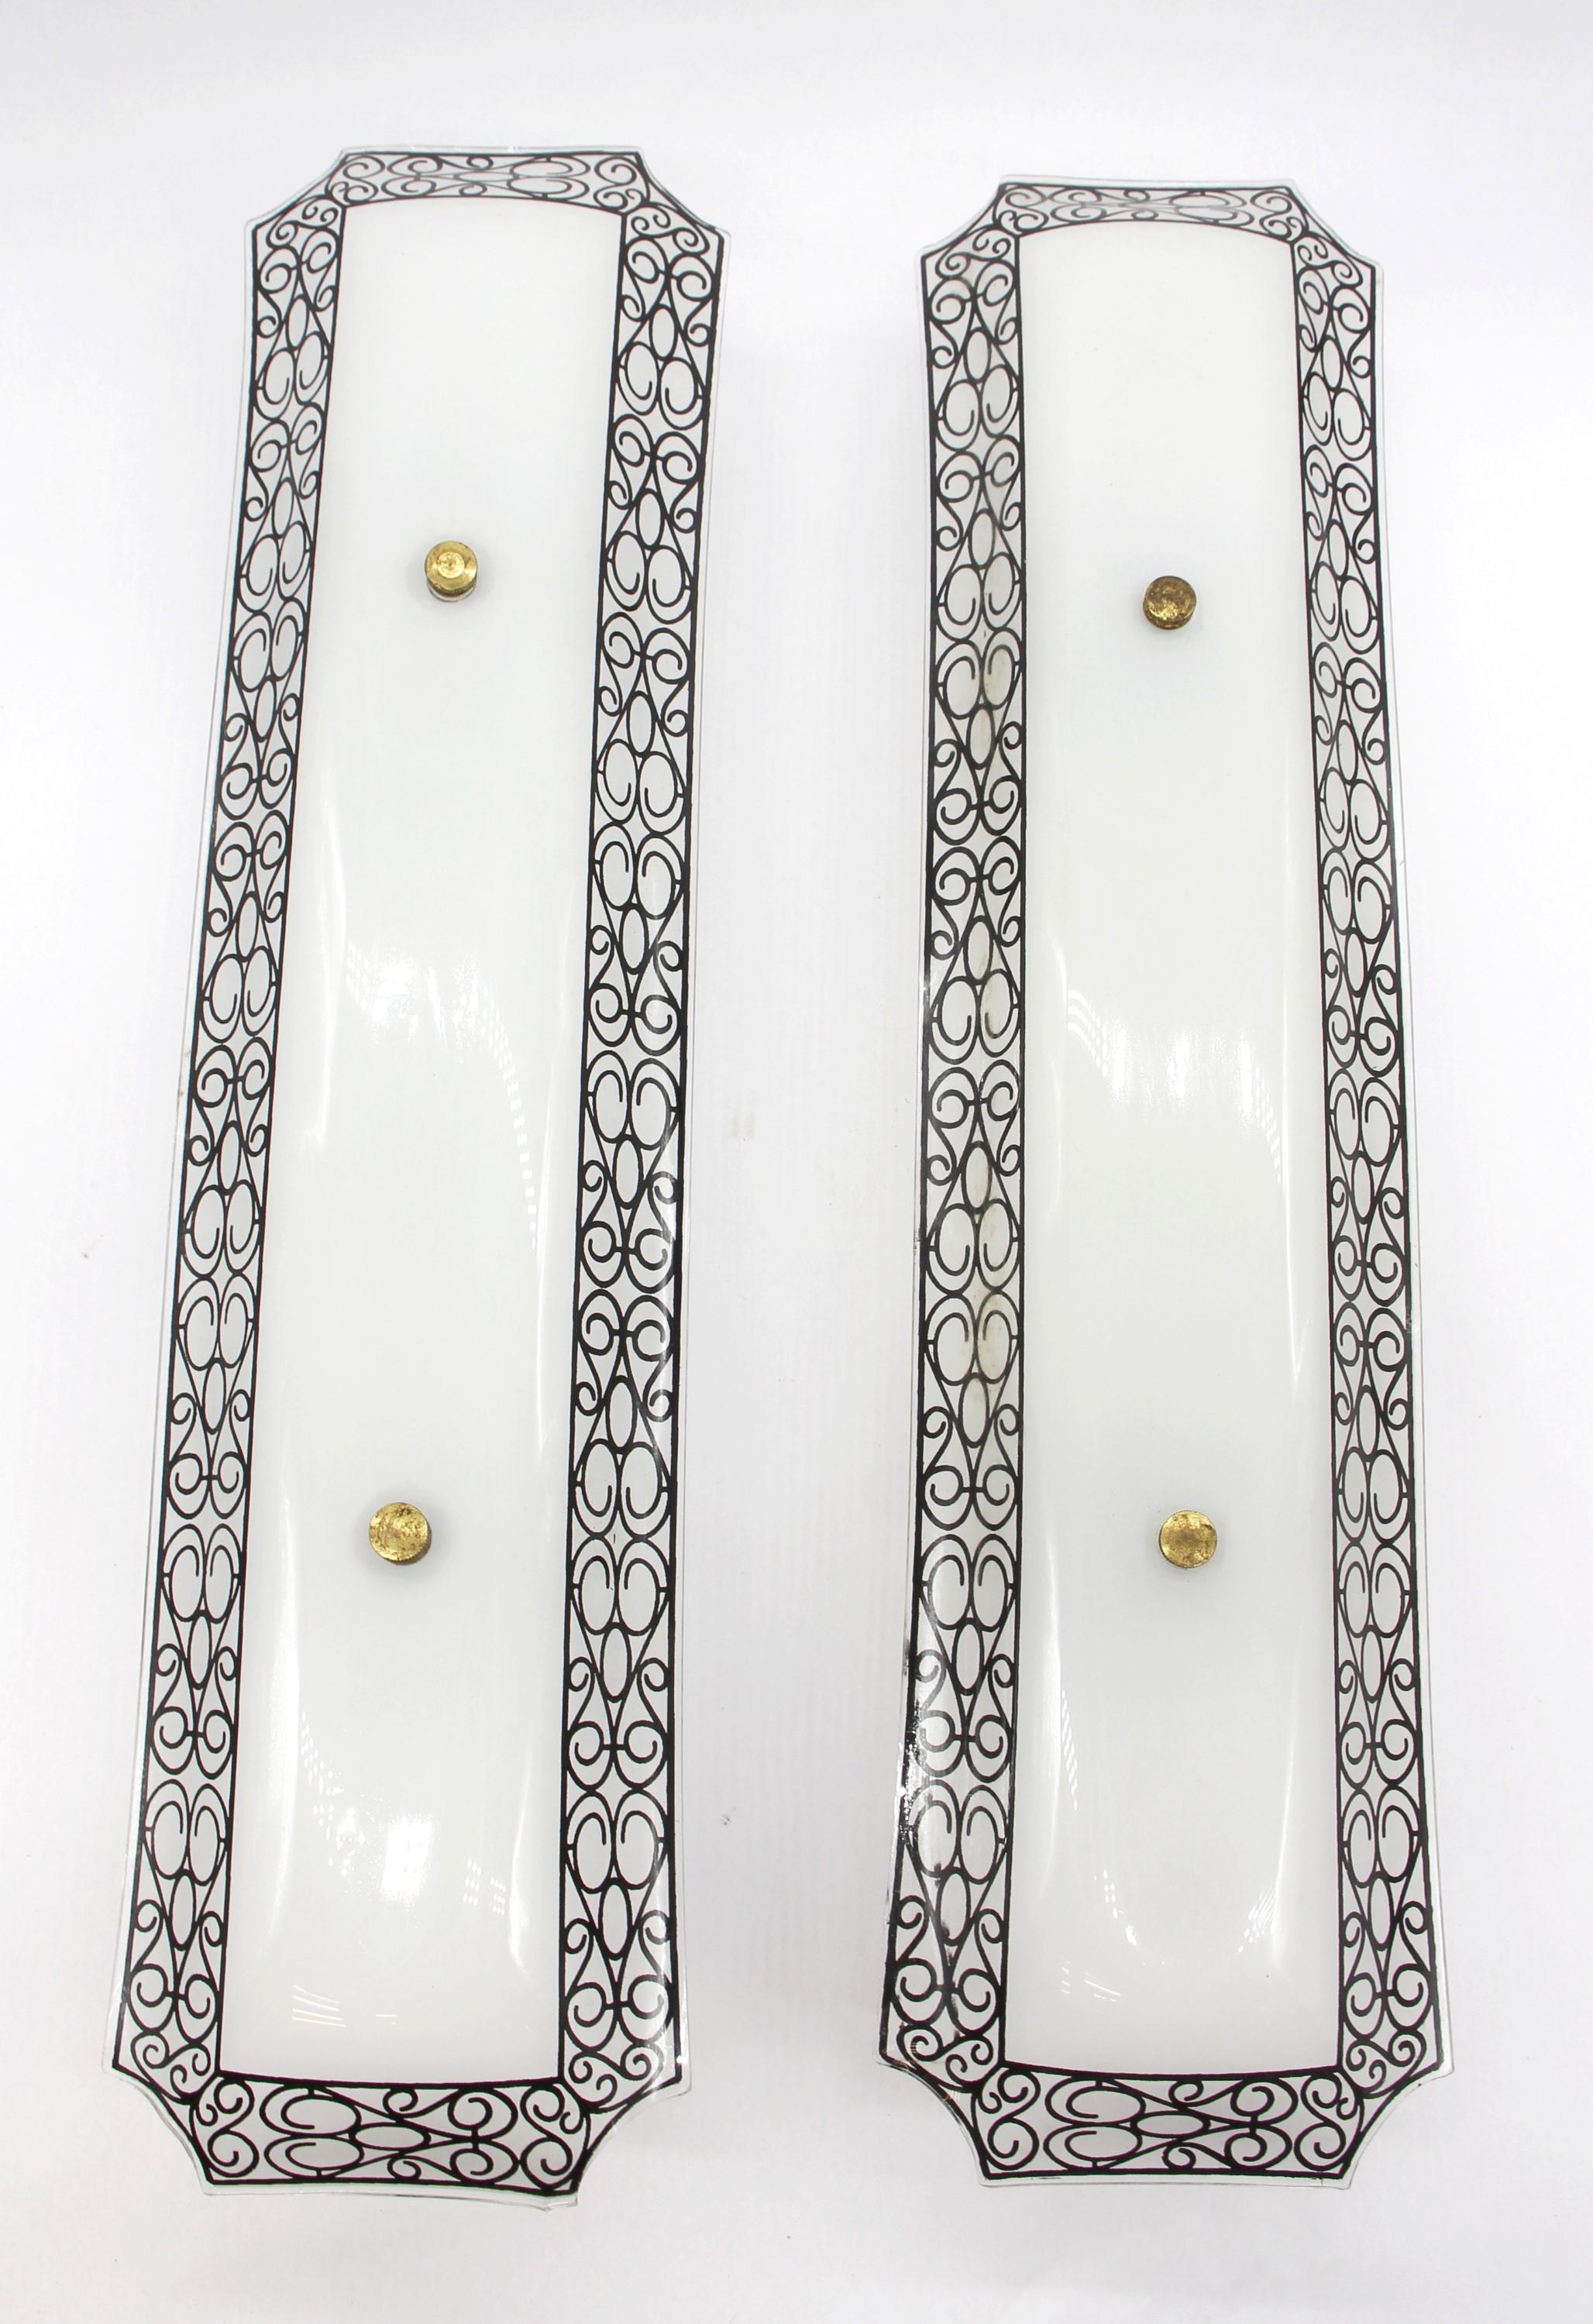 Pair of 1950s French Vanity Bathroom Sconces w/ White Glass & Black Swirl Design 6